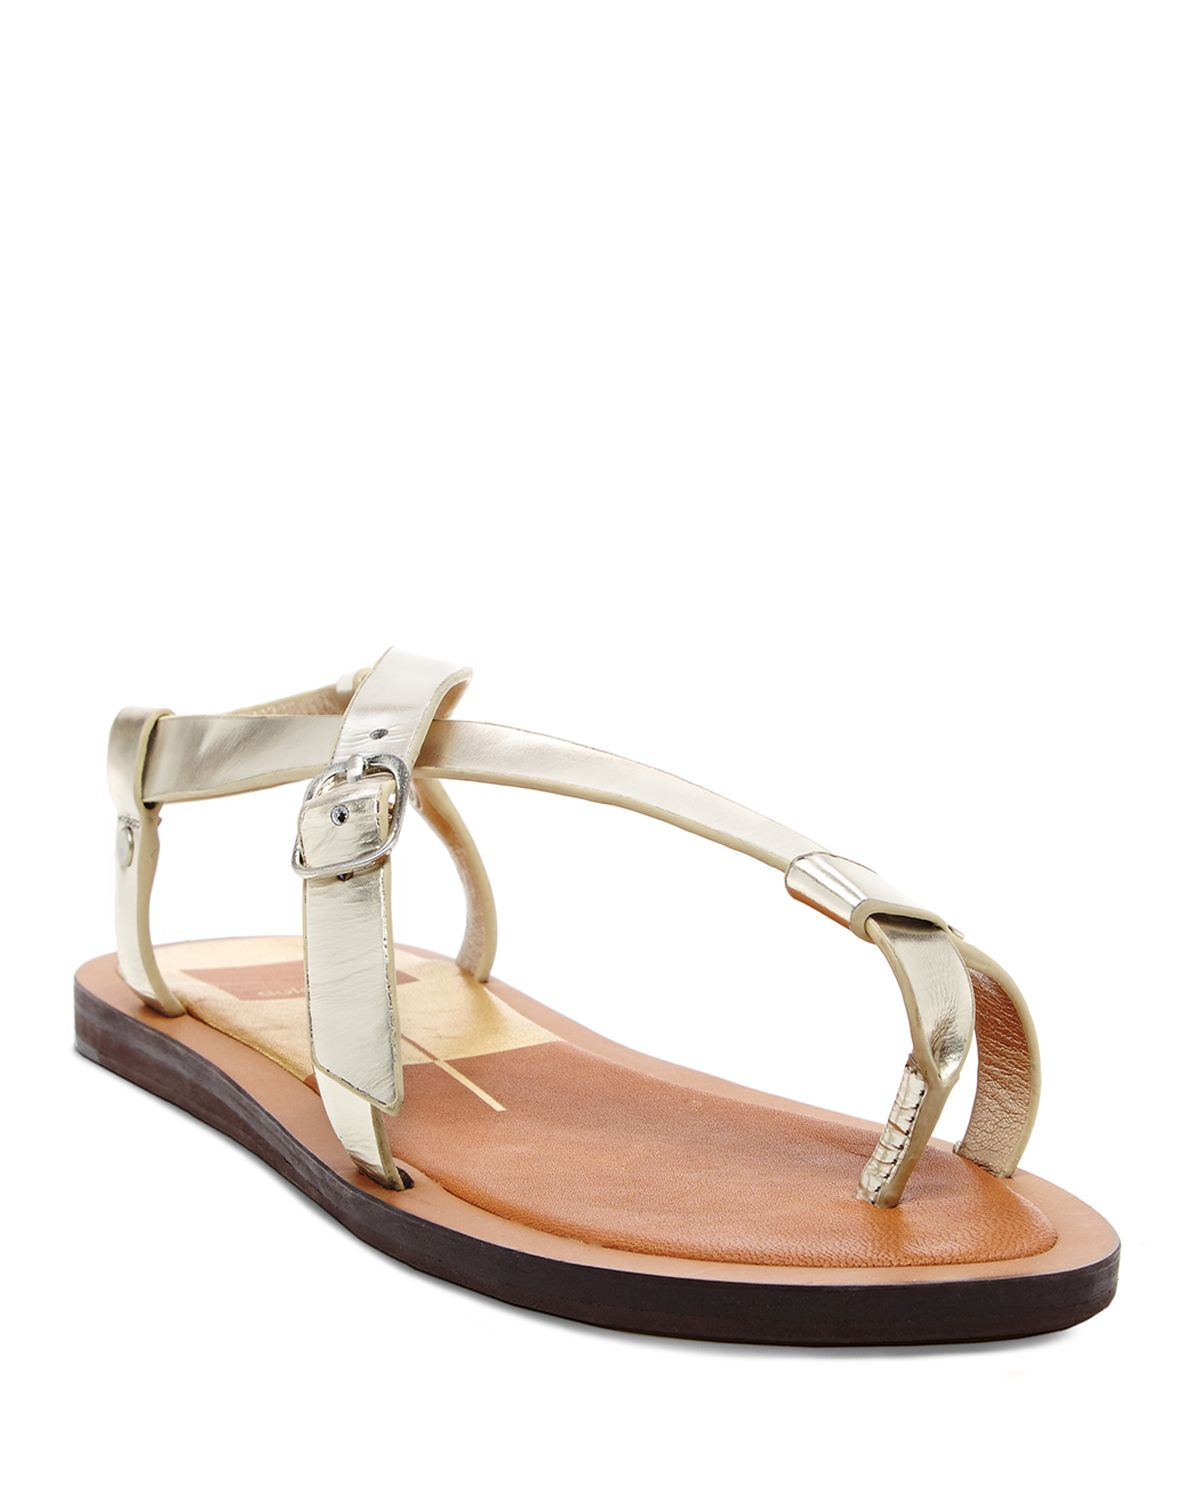 Dolce Vita Flat Thong Sandals - Flurera in Gold (Light Gold) | Lyst